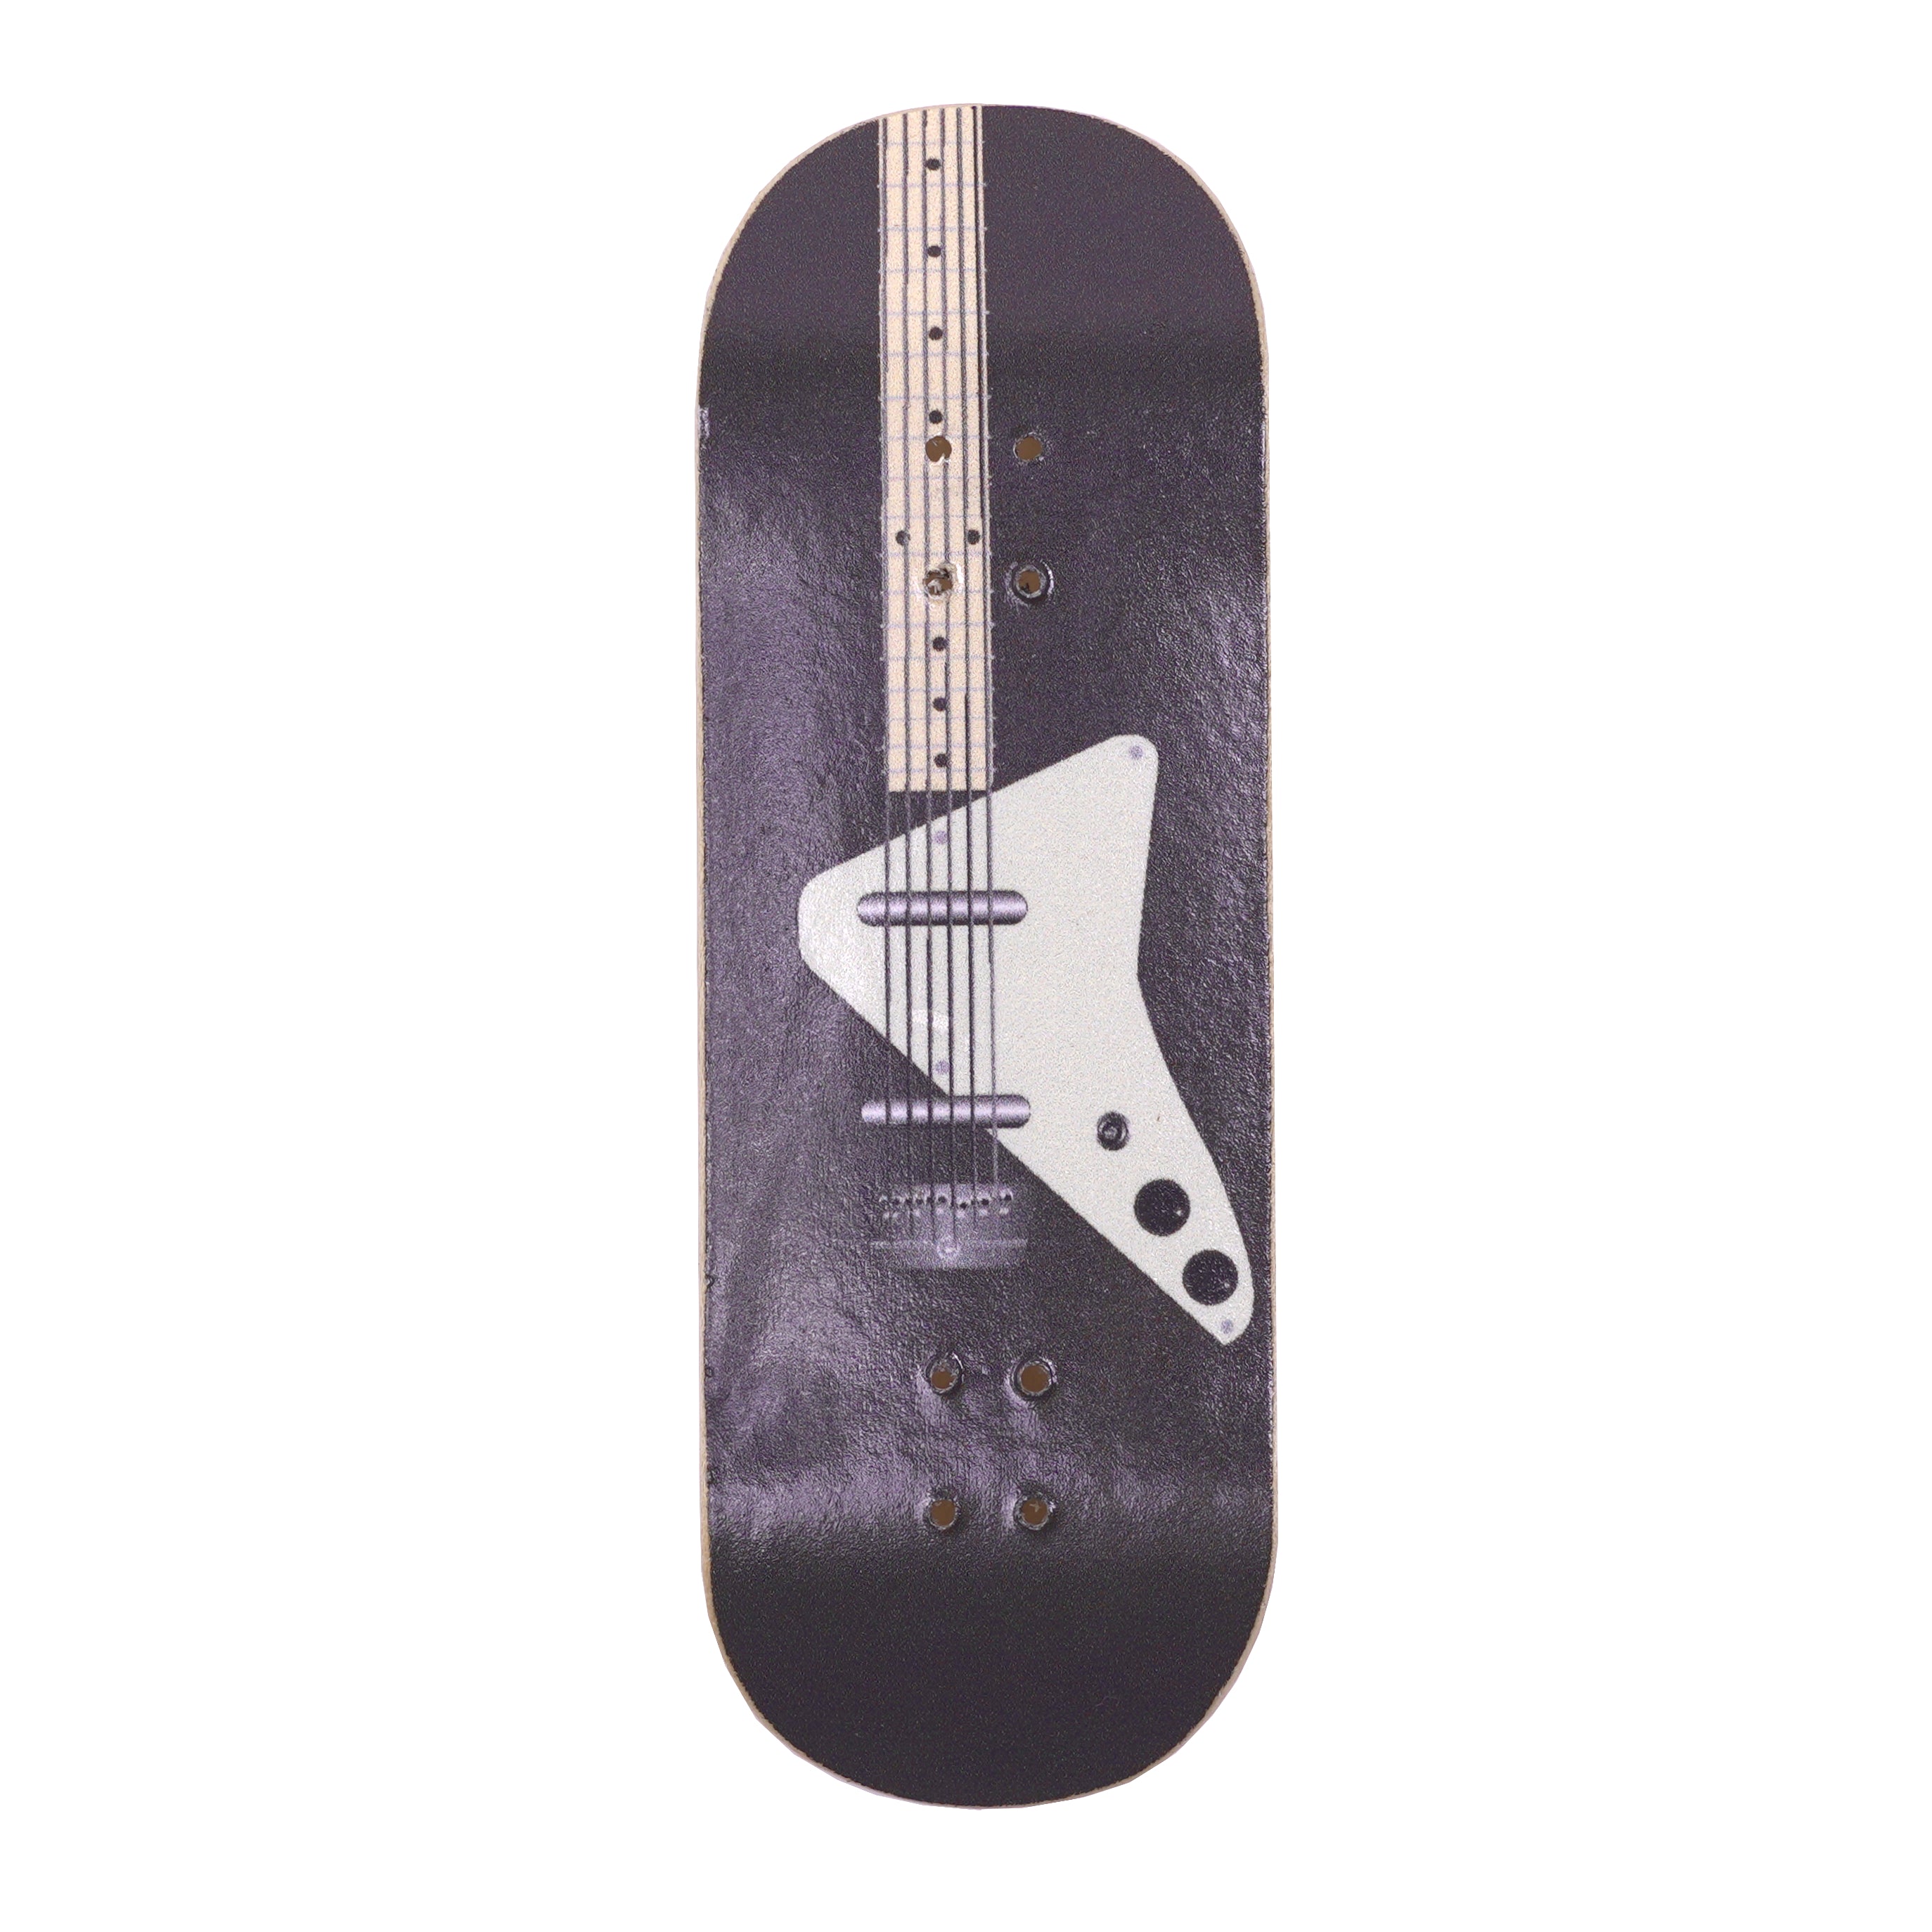 Brown Danelectro Guitar False Alarm Fingerboard Deck